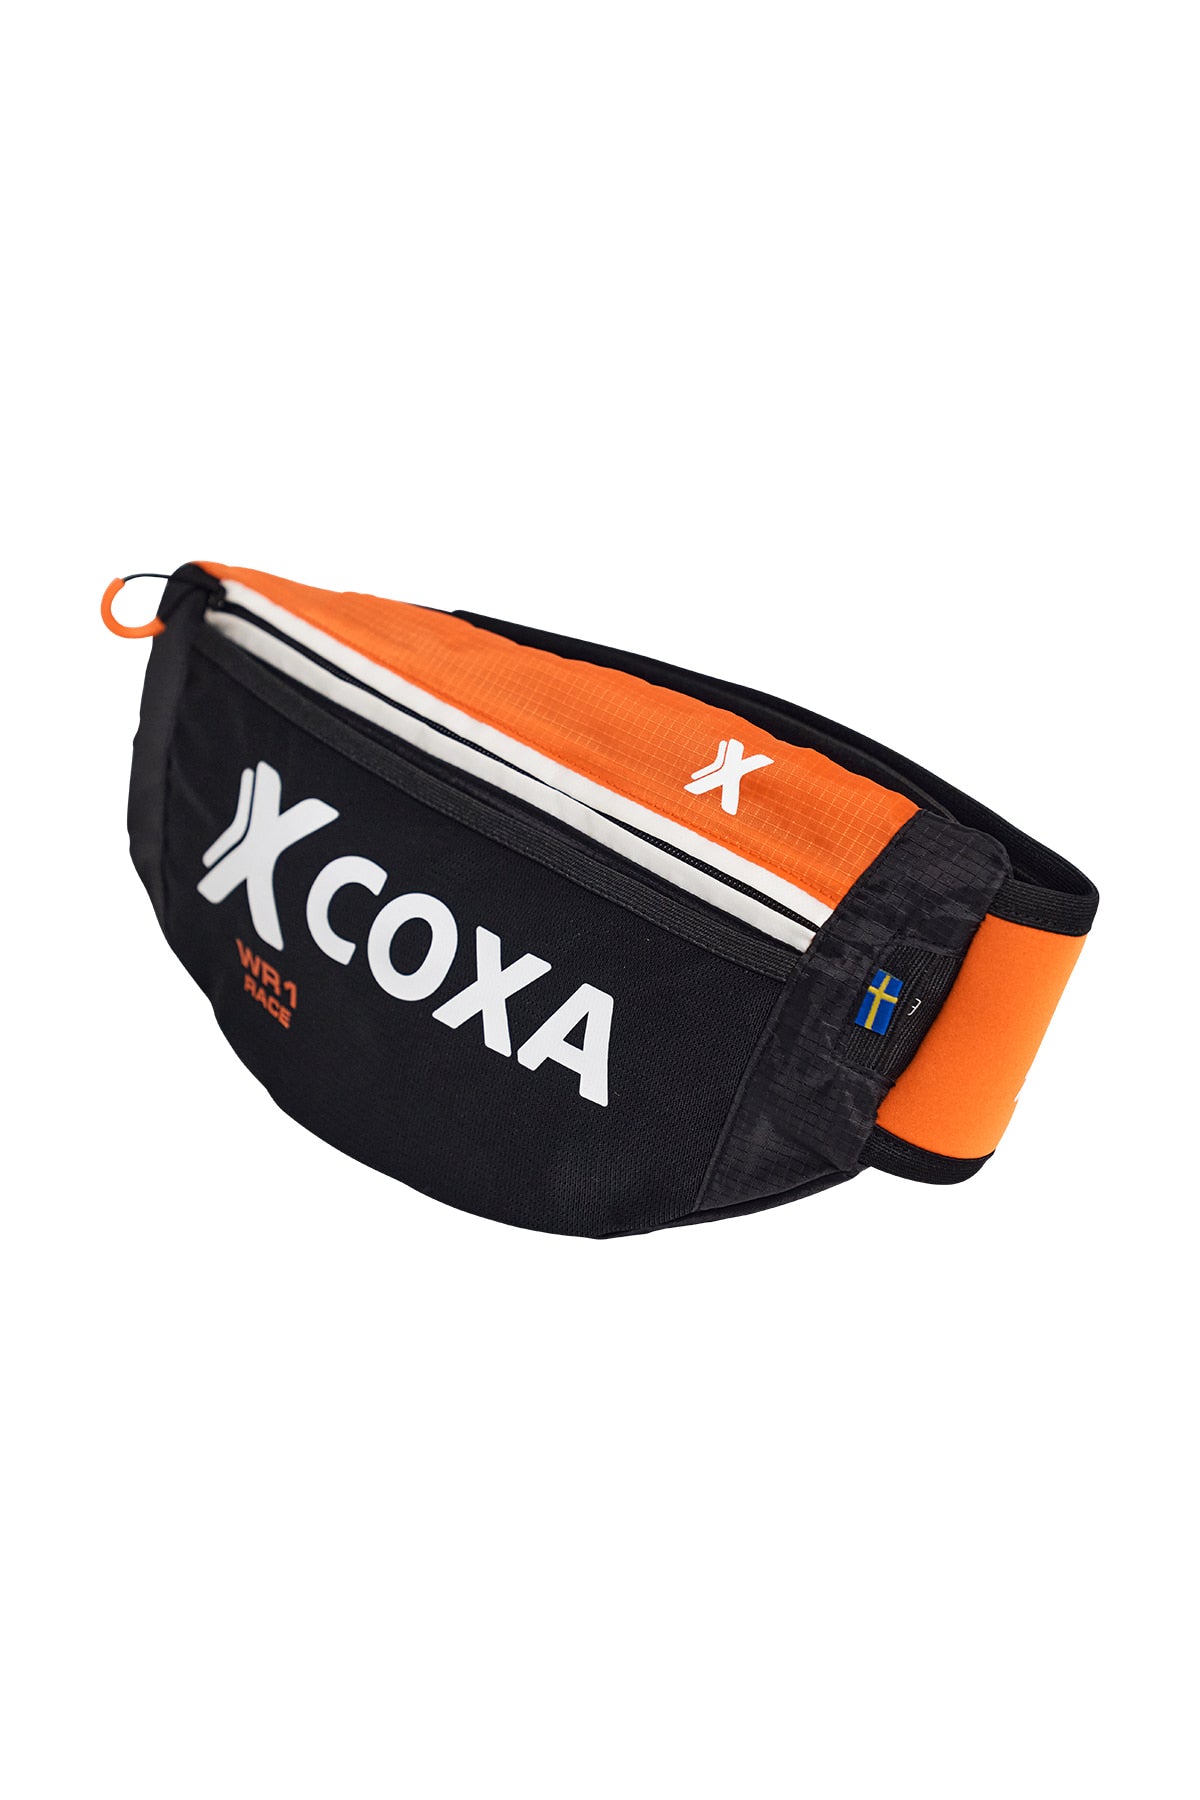 COXA WR1 Race Waist bag